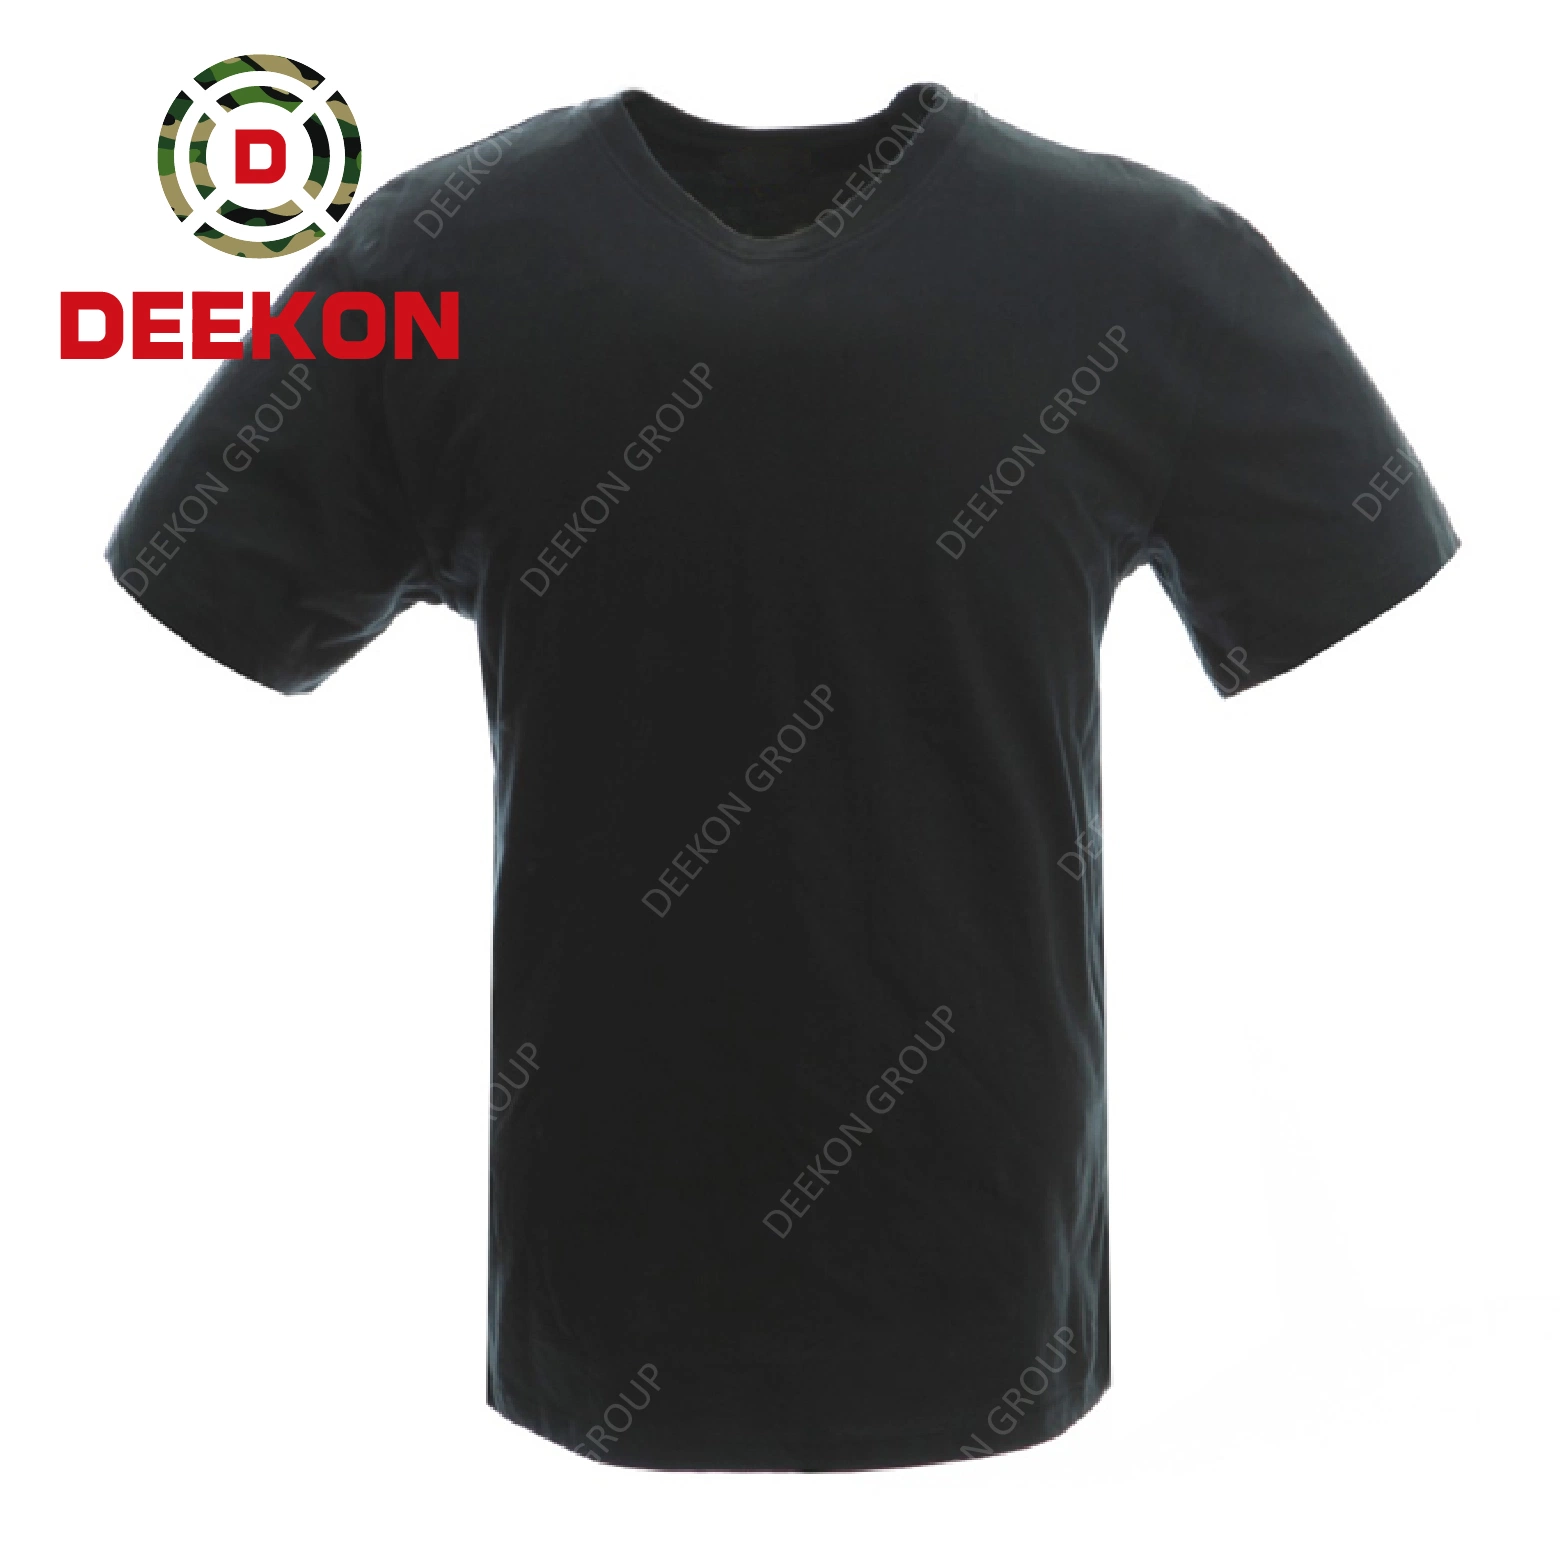 Deekon Short Sleeve Tactical T Shirts Military Polo Shirt for Police